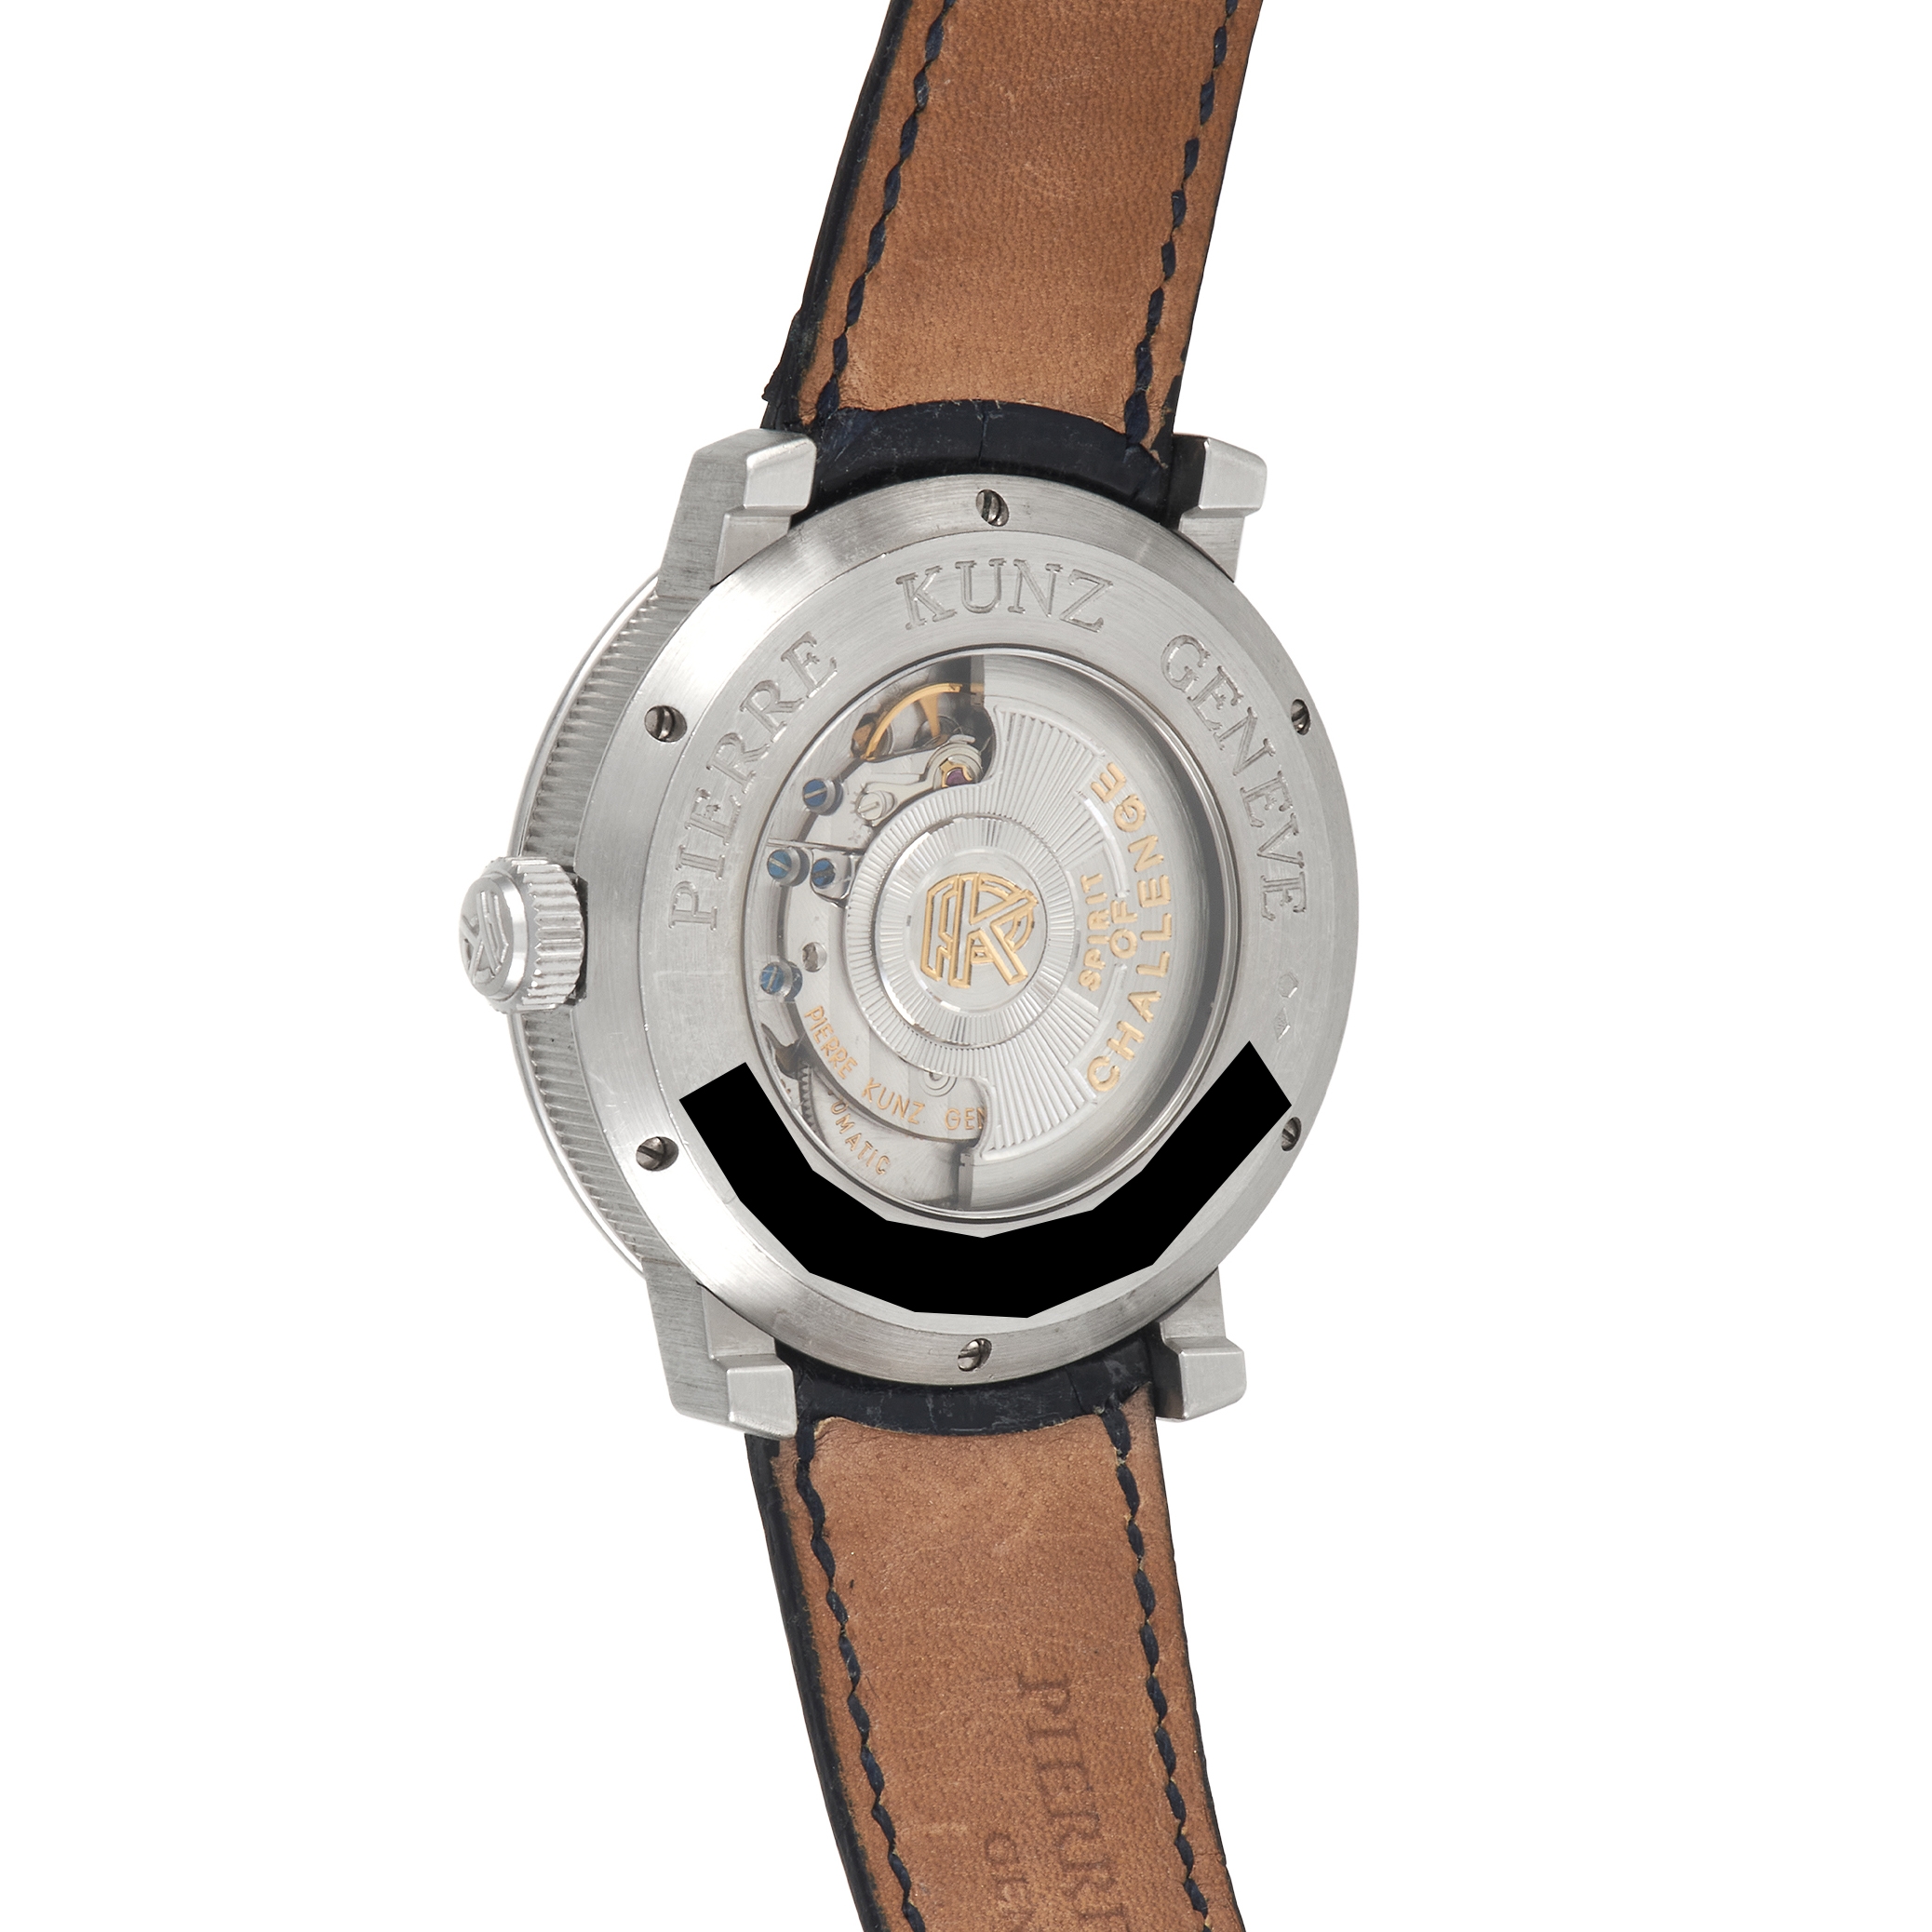 Pierre Kunz Spirit of Challenge Retrograde Diamond Watch PKA 011 SDR.3